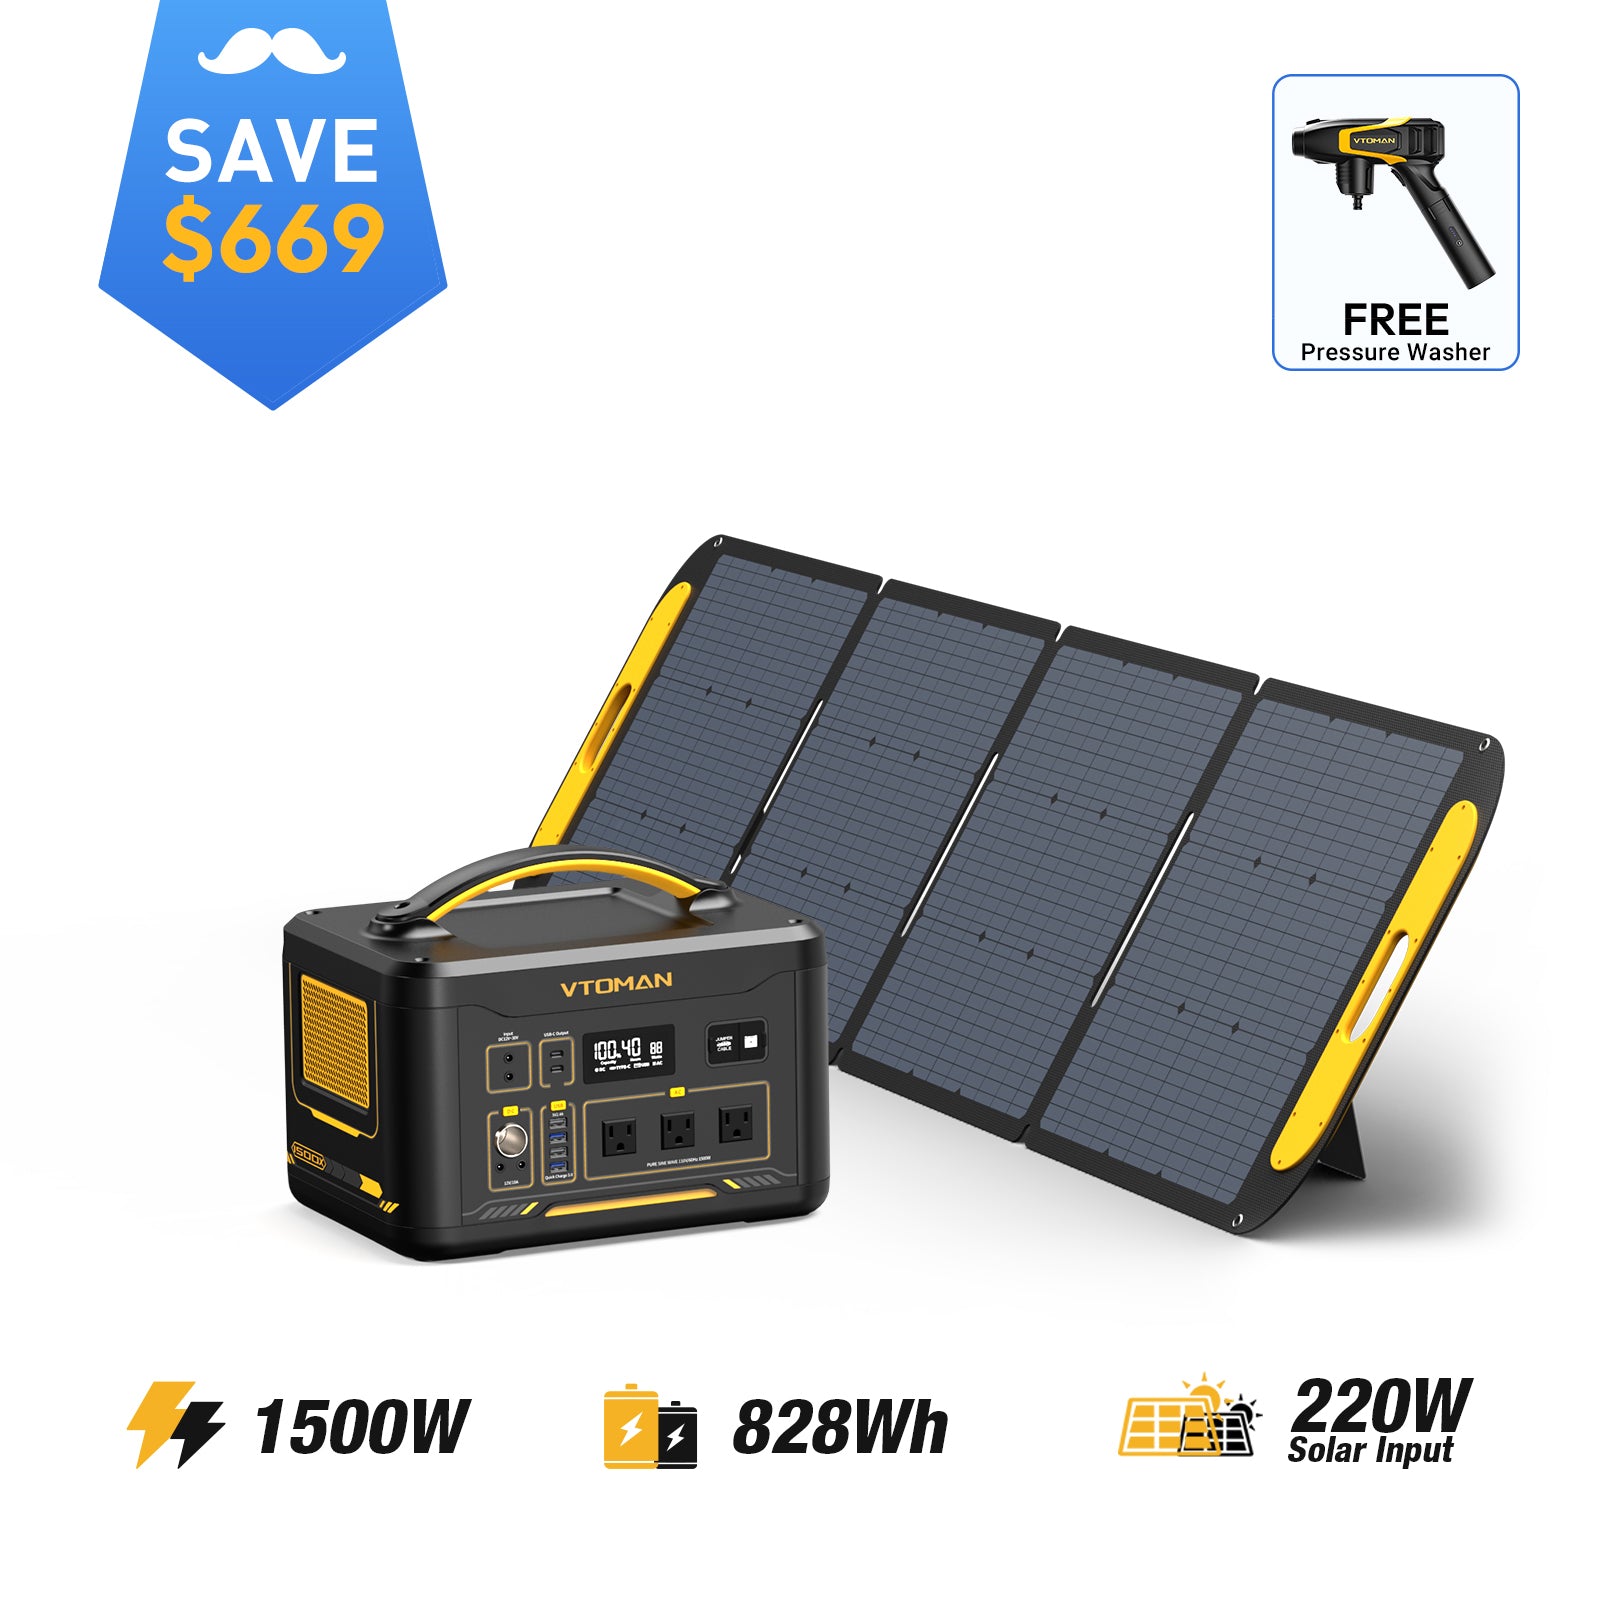 Jump 1500W/828Wh 220W Solar Generator